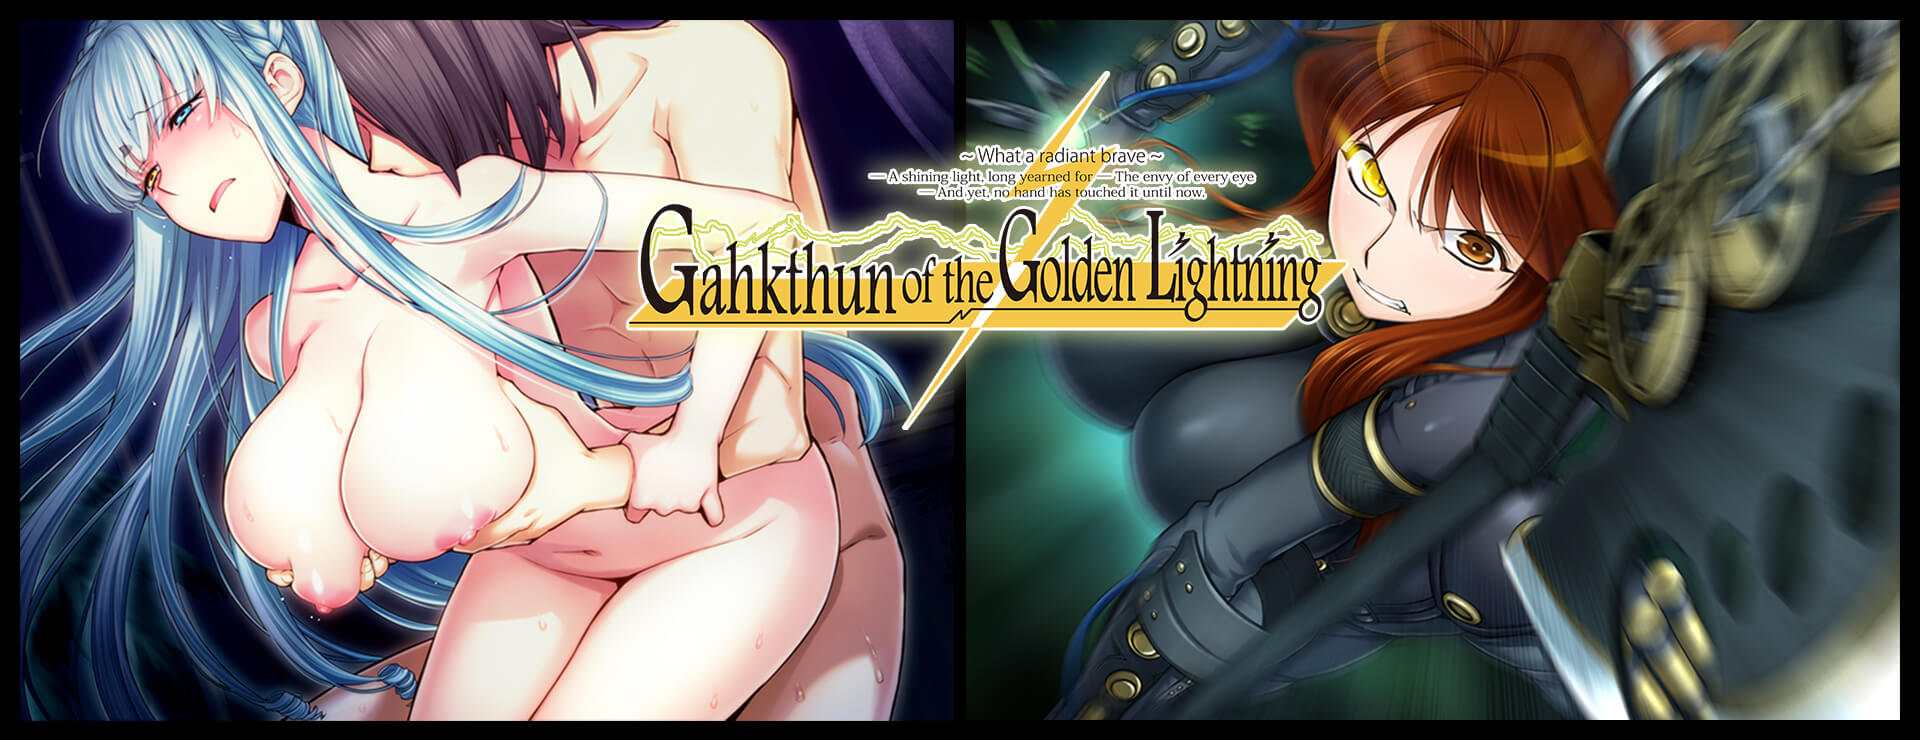 Gahkthun of the Golden Lightning - Powieść wizualna Gra